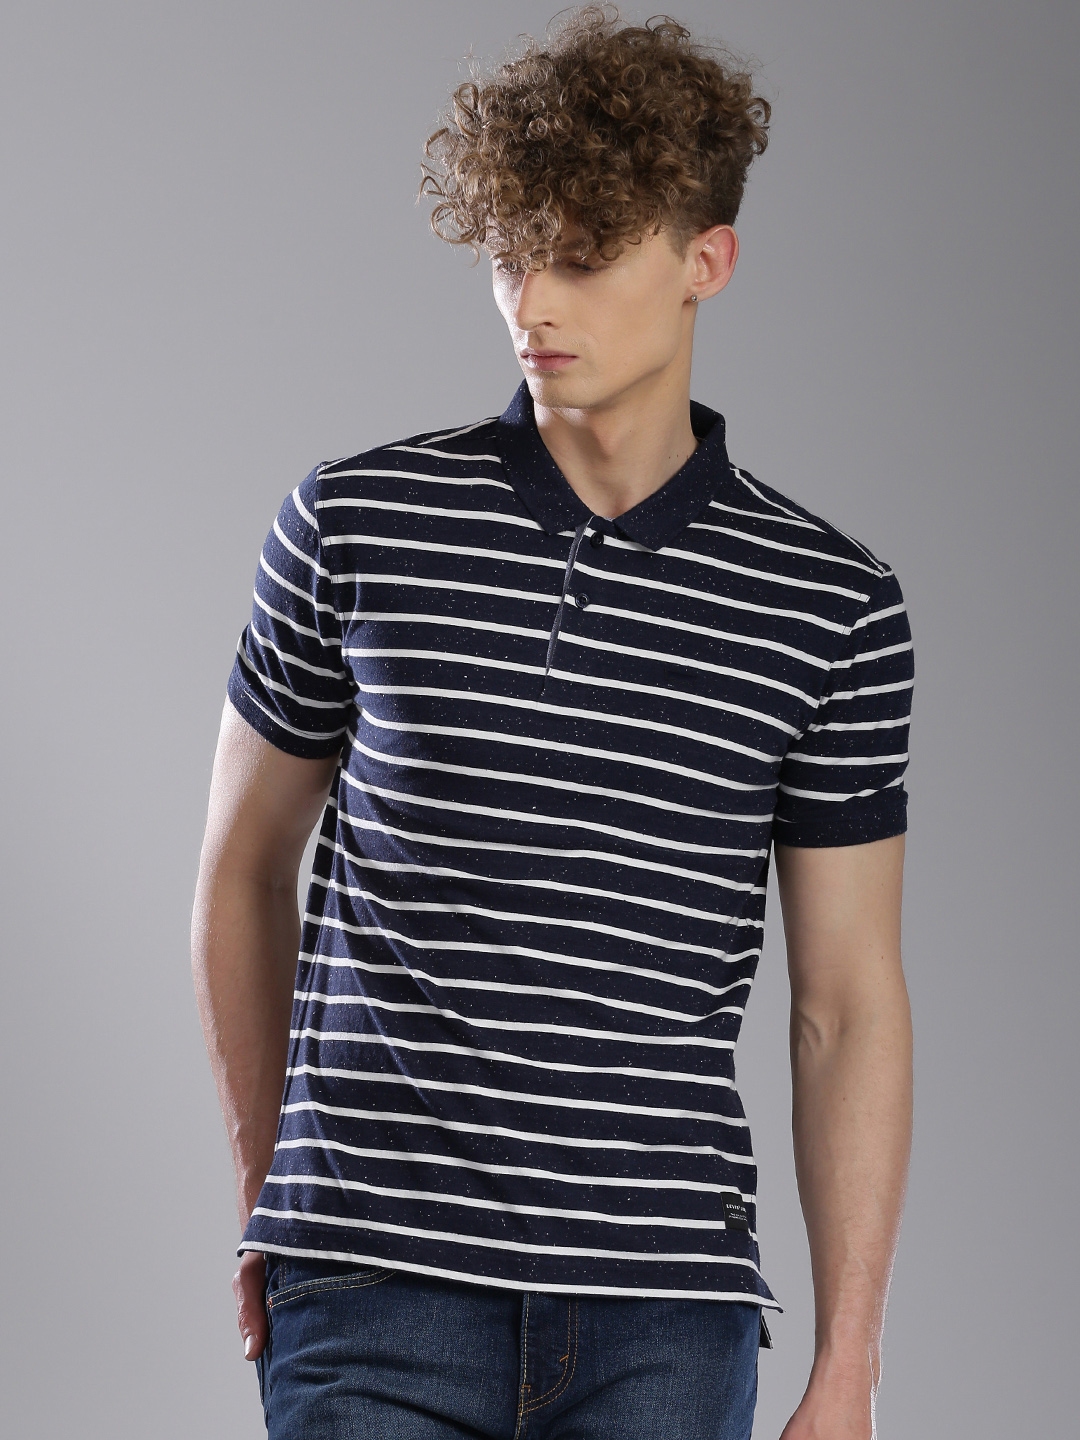 Buy Levis Men Navy & White Striped Polo T Shirt - Tshirts for Men 1833028 |  Myntra